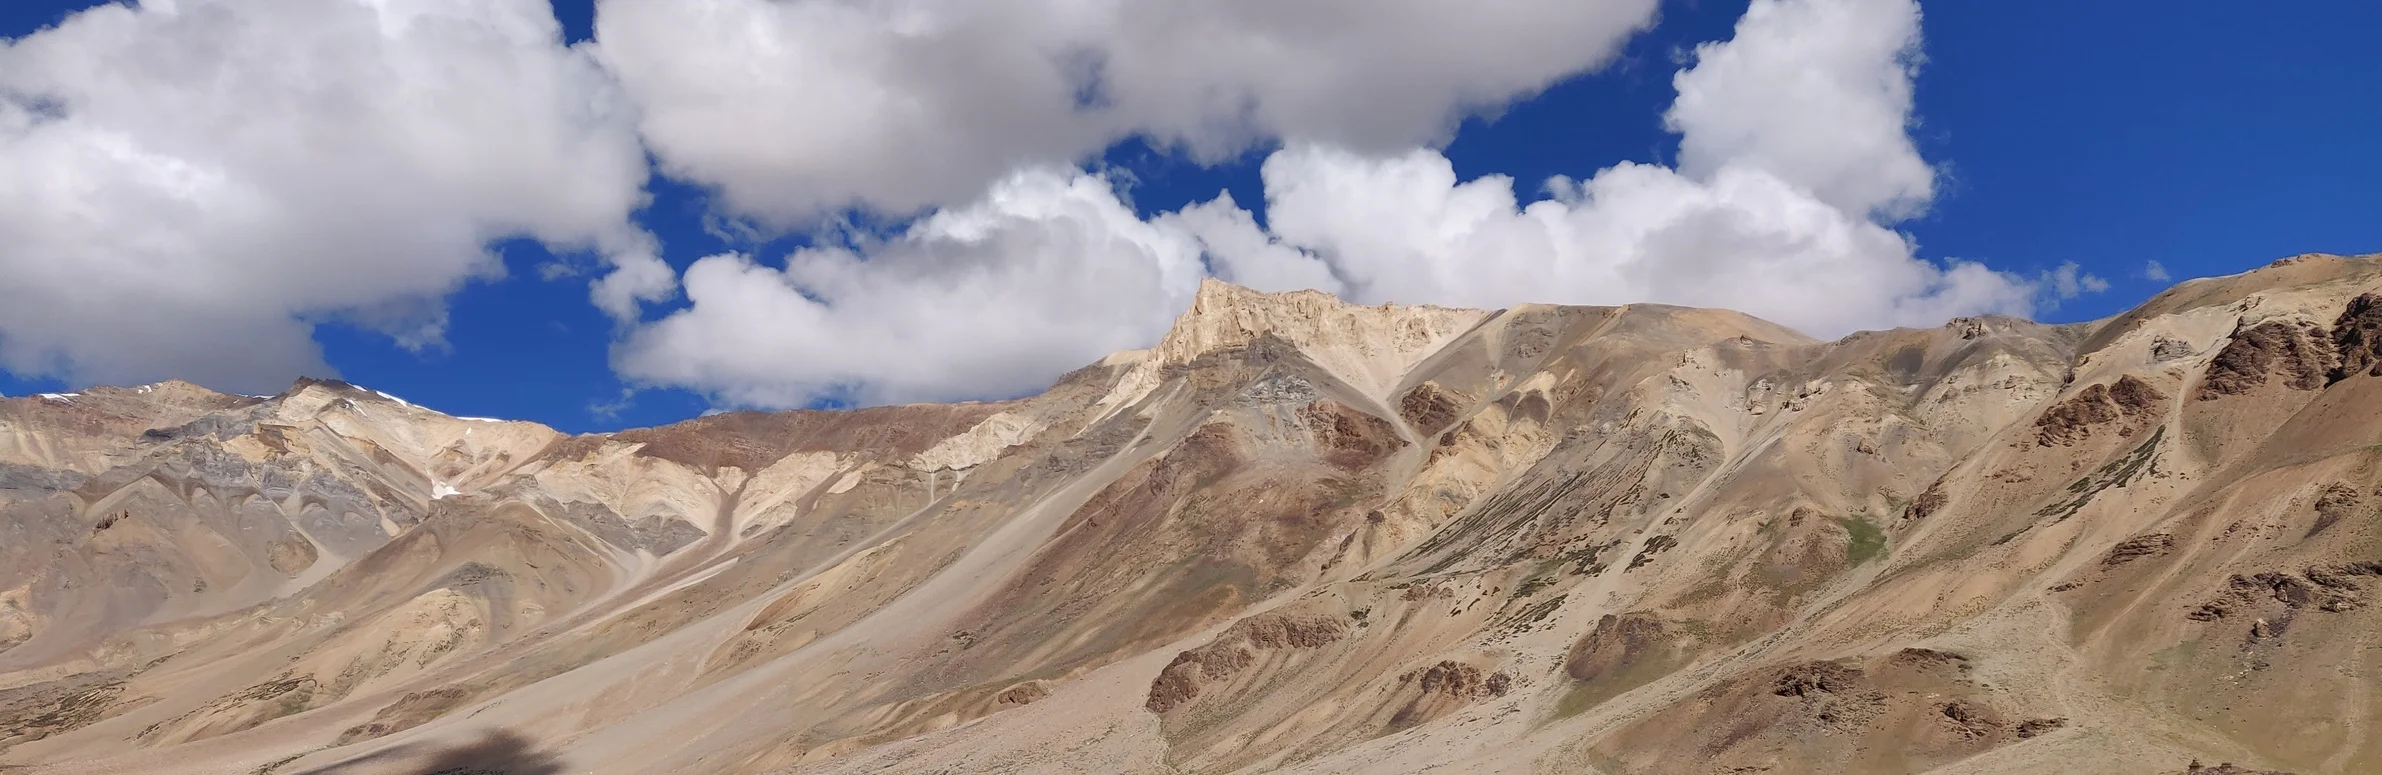 Eco tips to visit Leh Ladakh